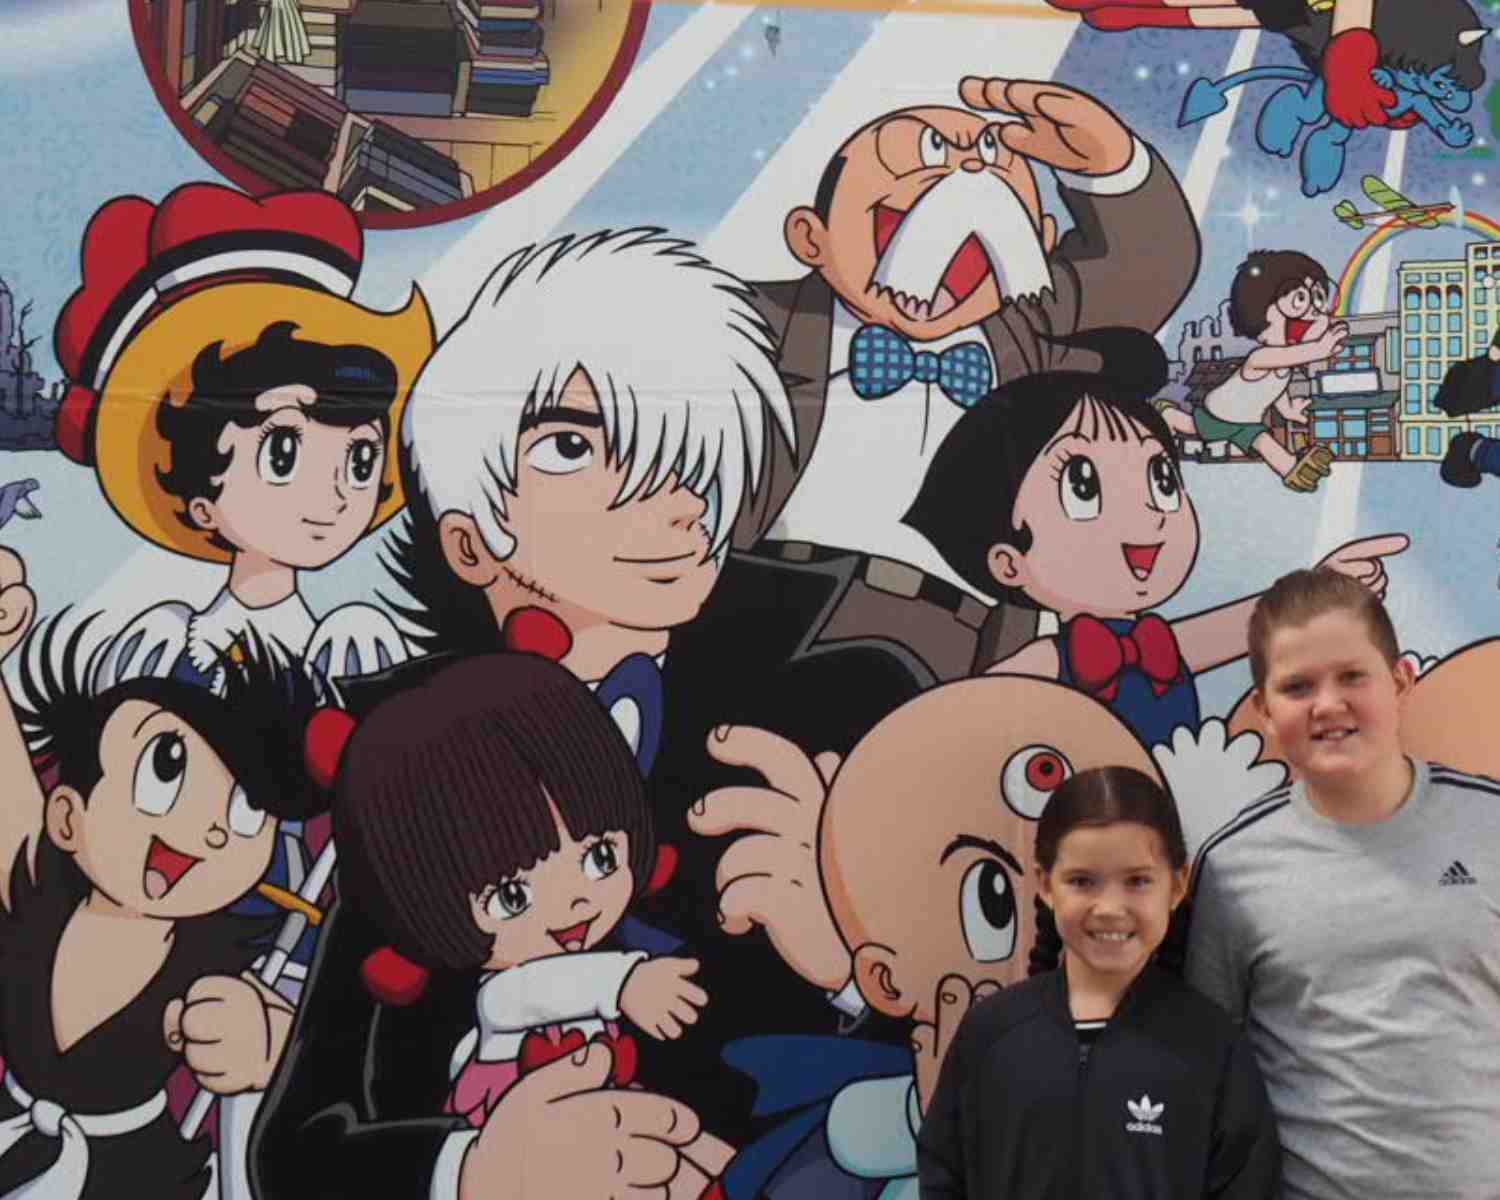 Finding the original birthplace of Astro Boy in Takadanobaba Japan